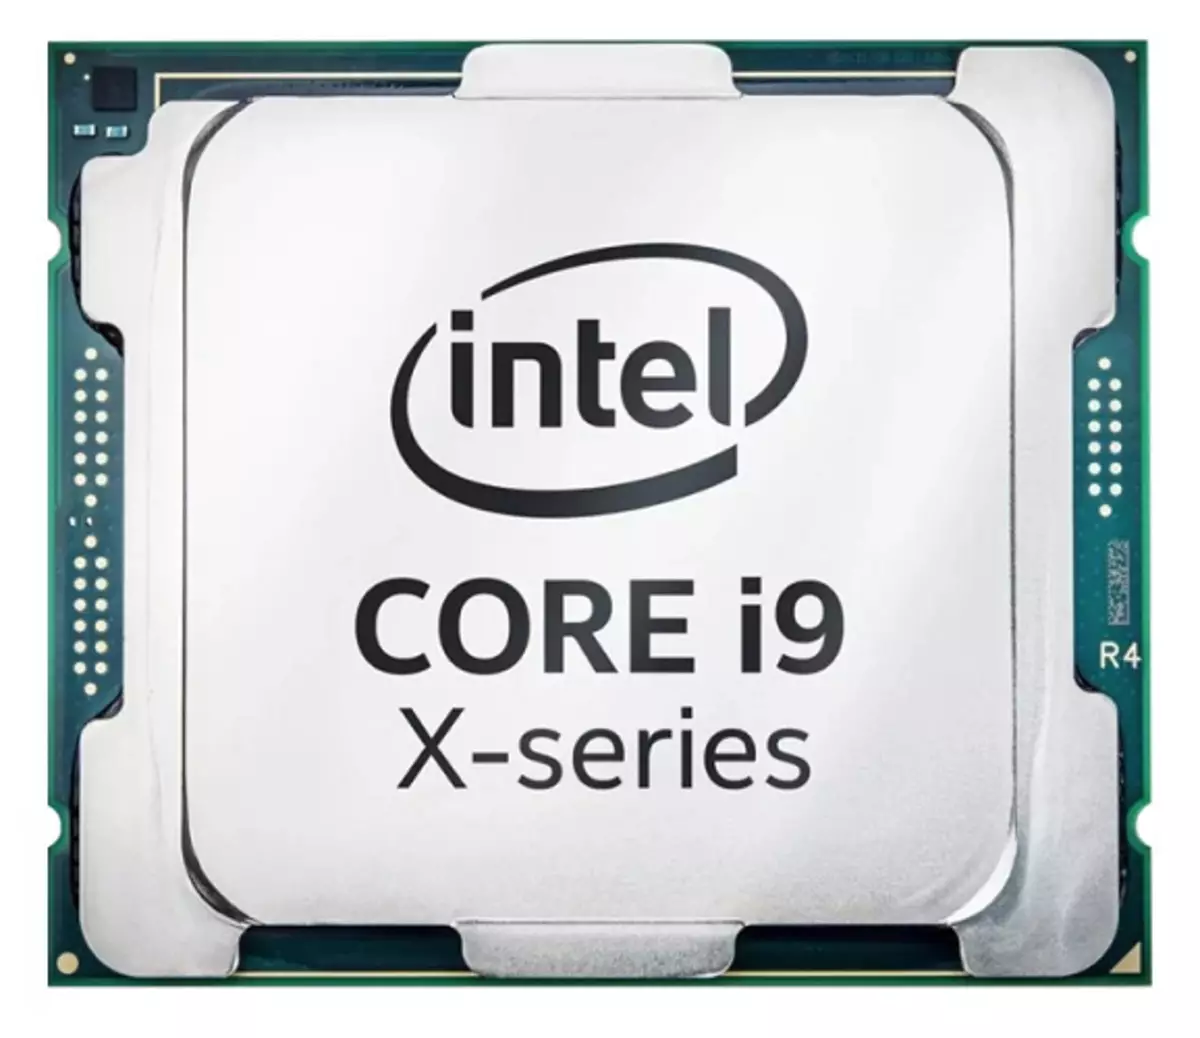 Generell utsikt over Intel Core i9-7960x Skylake